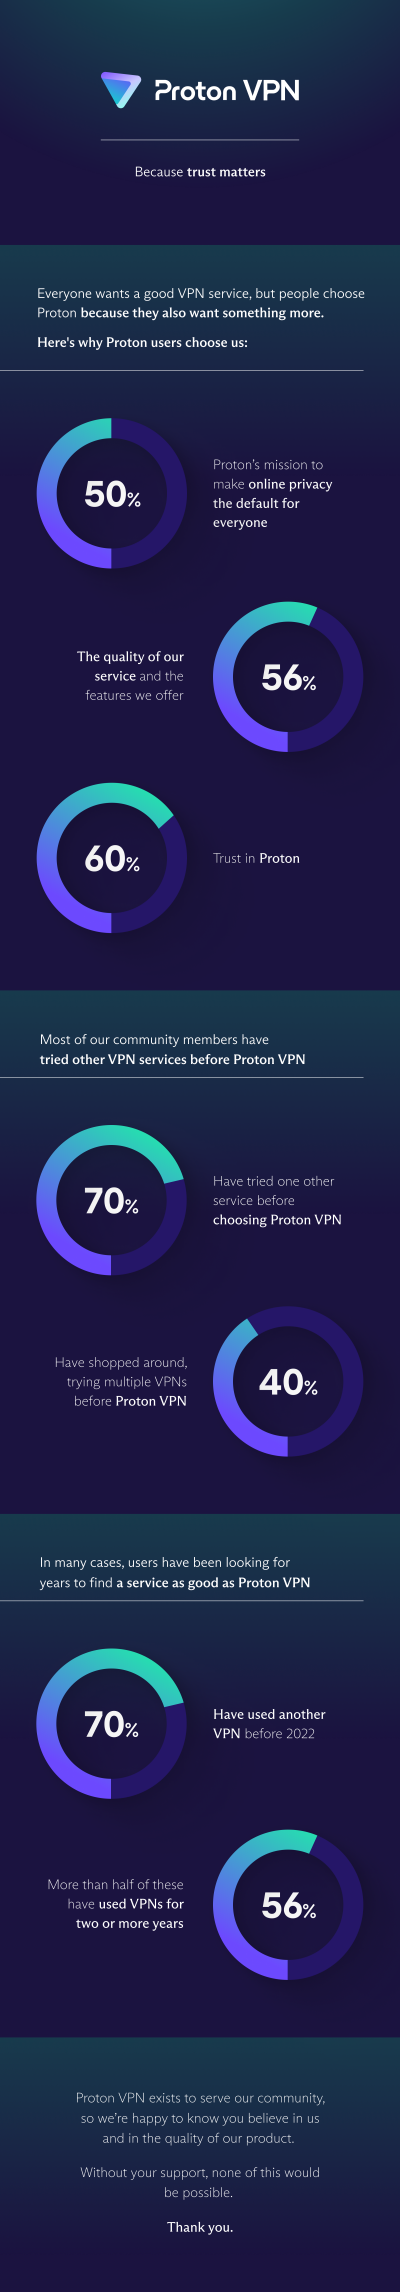 Proton VPN - because trust matters survey infographic